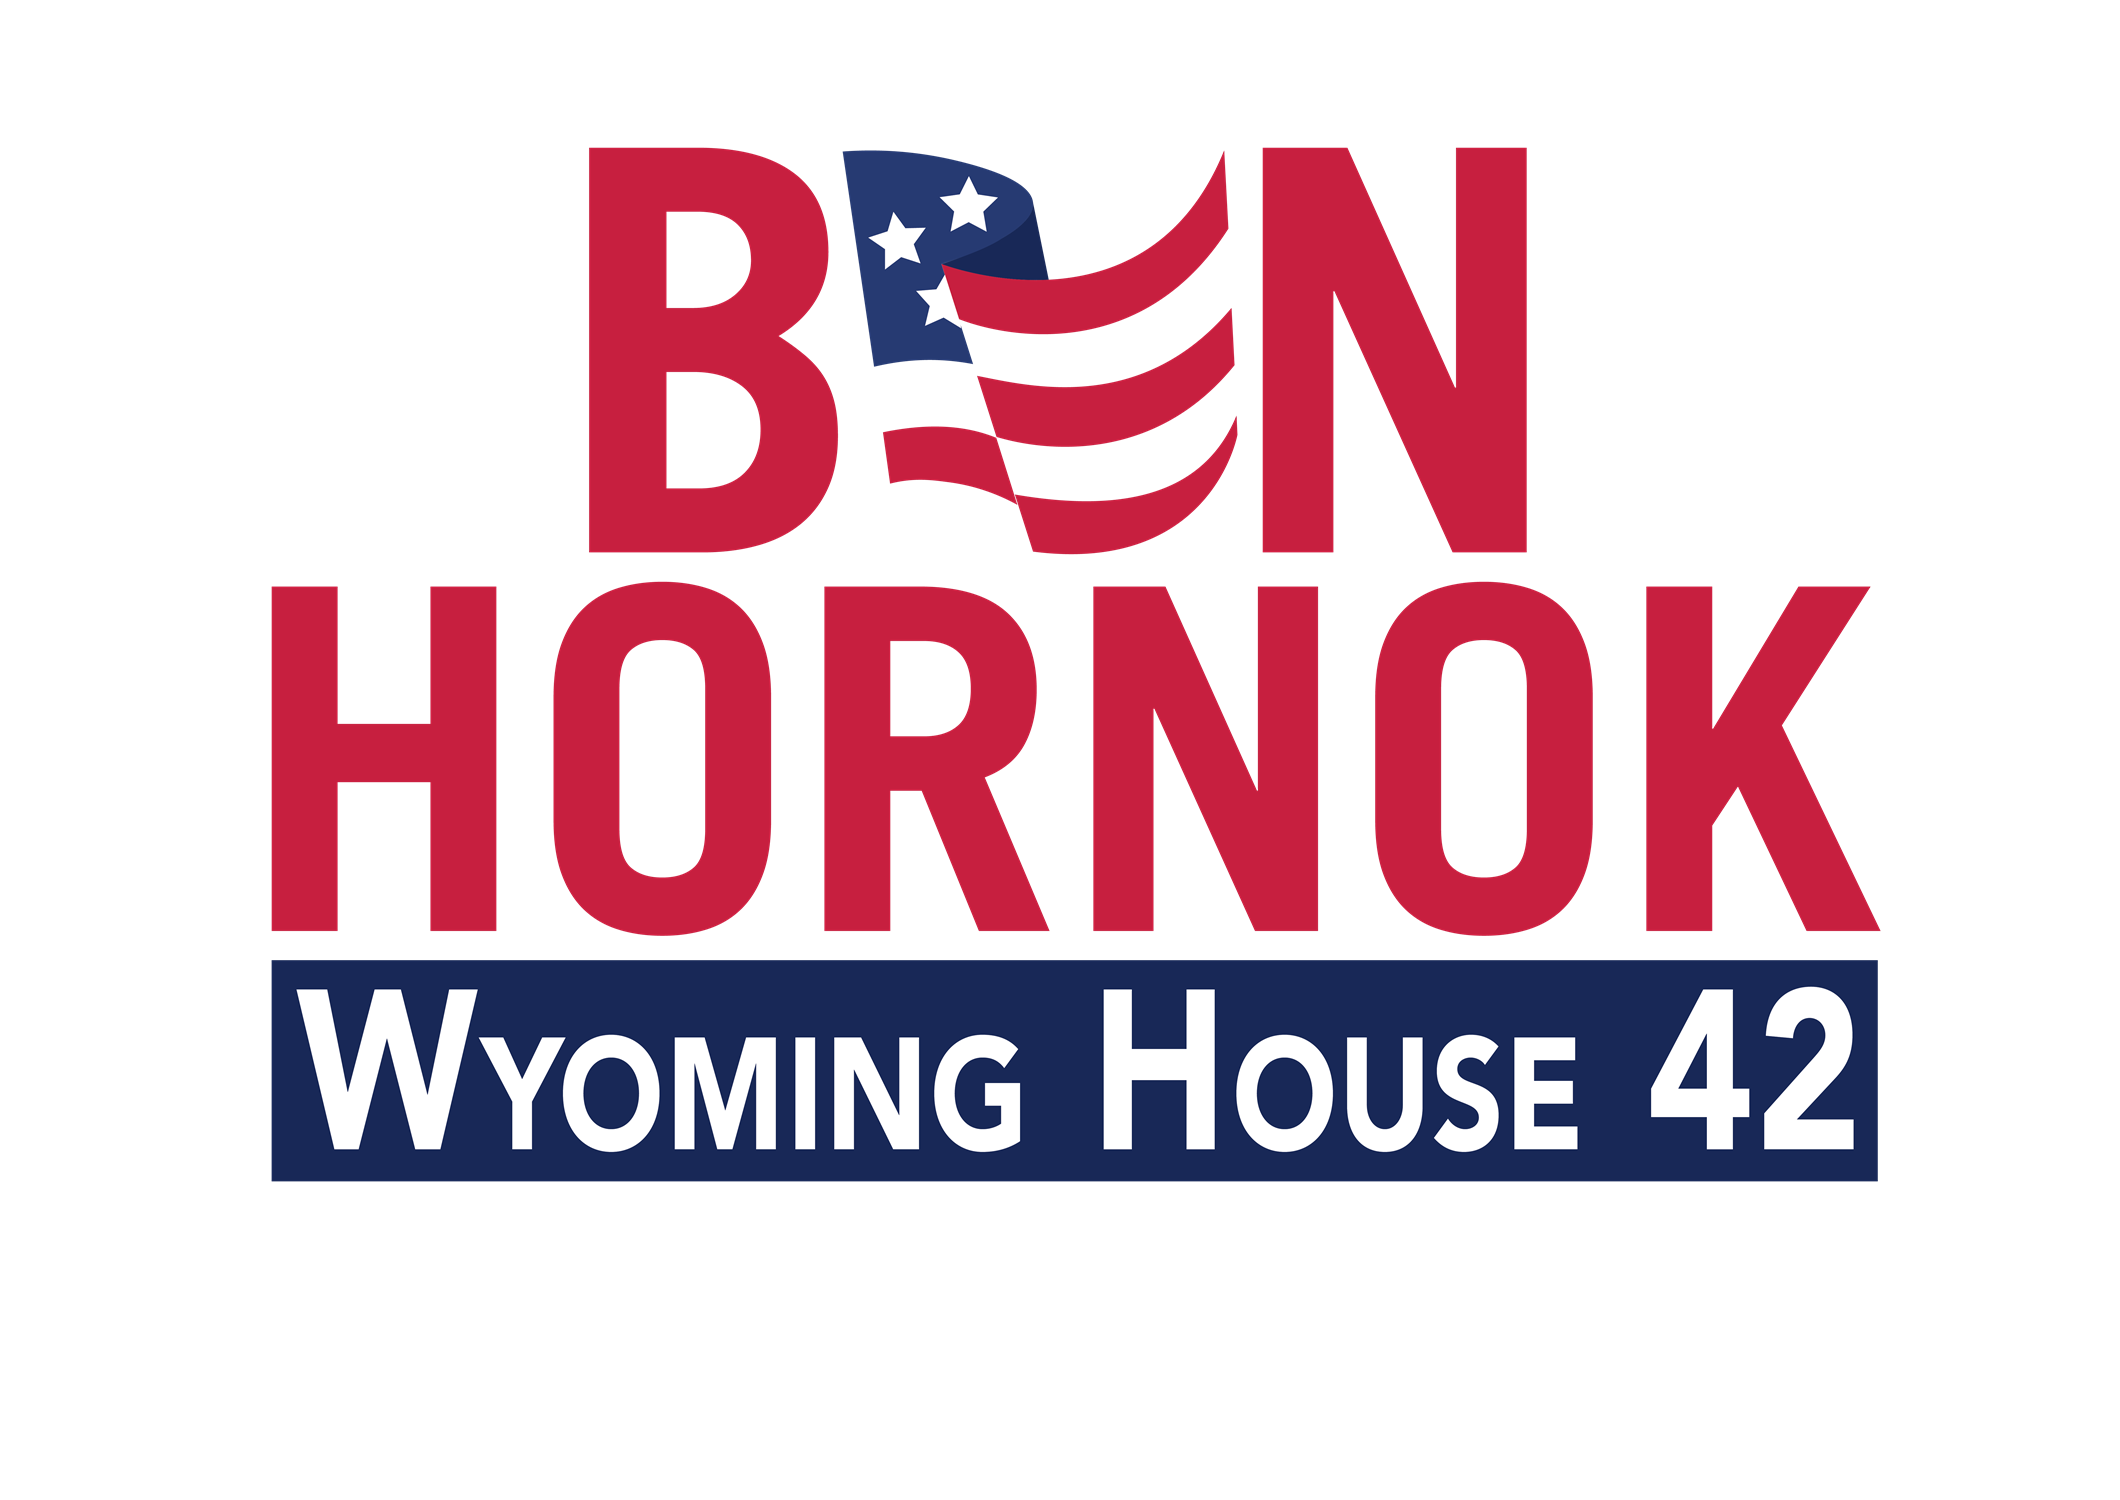 Ben Hornok Wyoming House 42